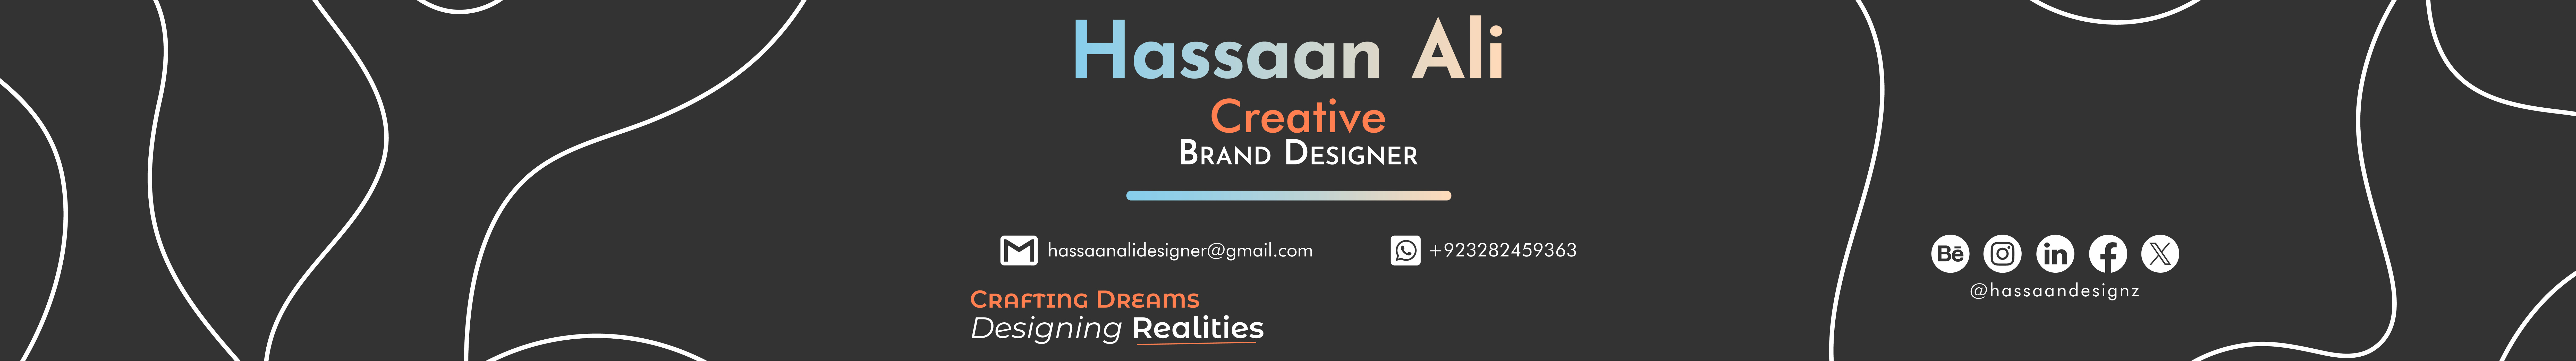 Hassaan Ali's profile banner